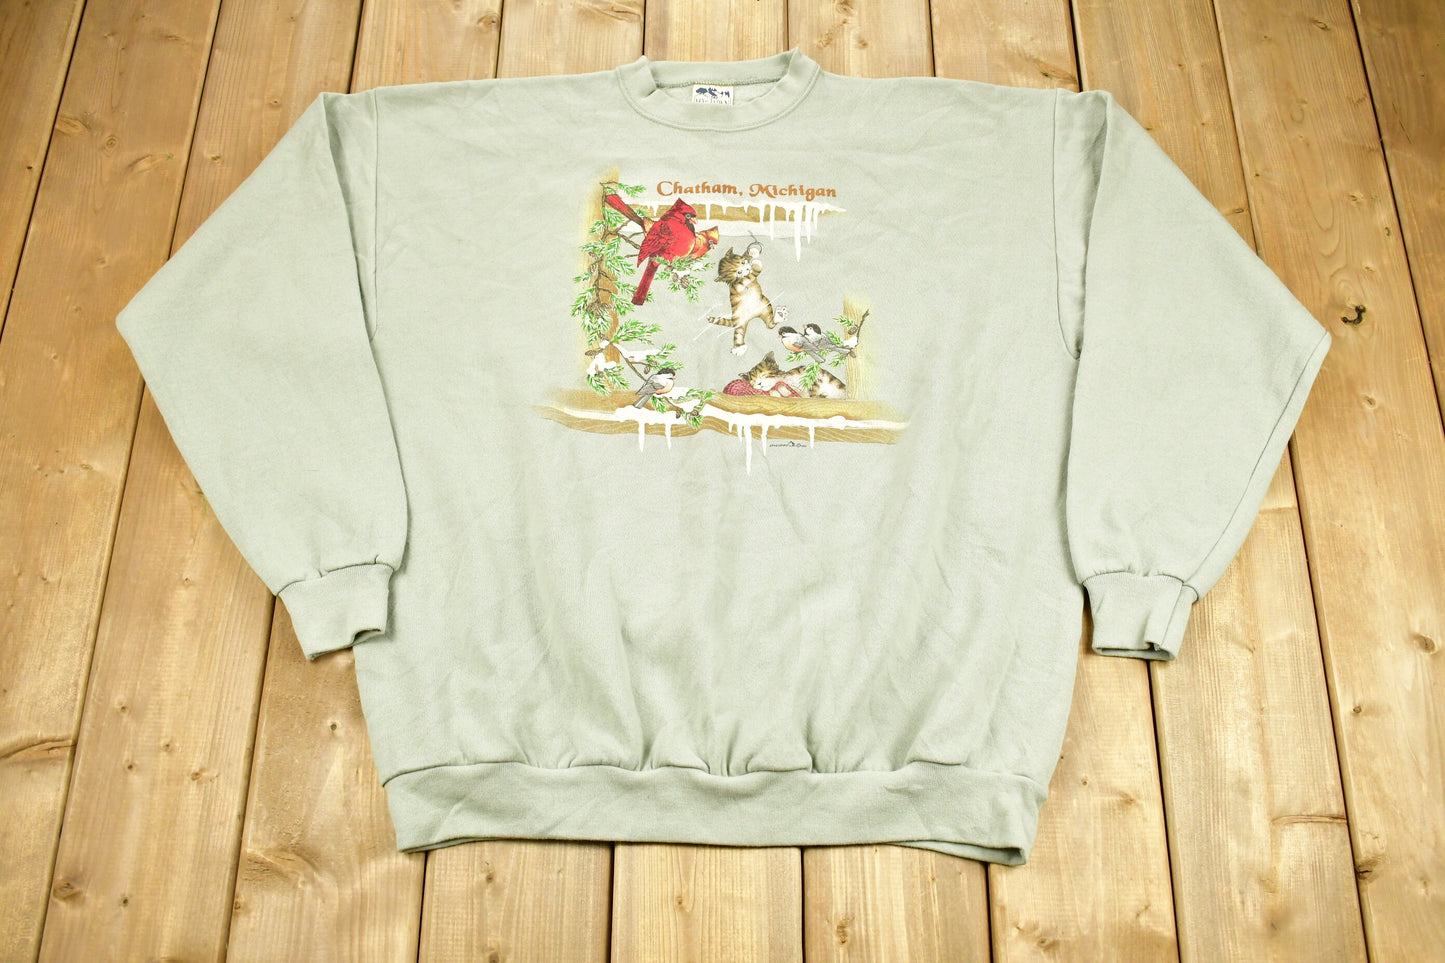 Vintage 1990s Chatham Michigan Cute Animal Graphic Crewneck Sweatshirt / 90s Crewneck / Souvenir / Streetwear / Travel And Tourism